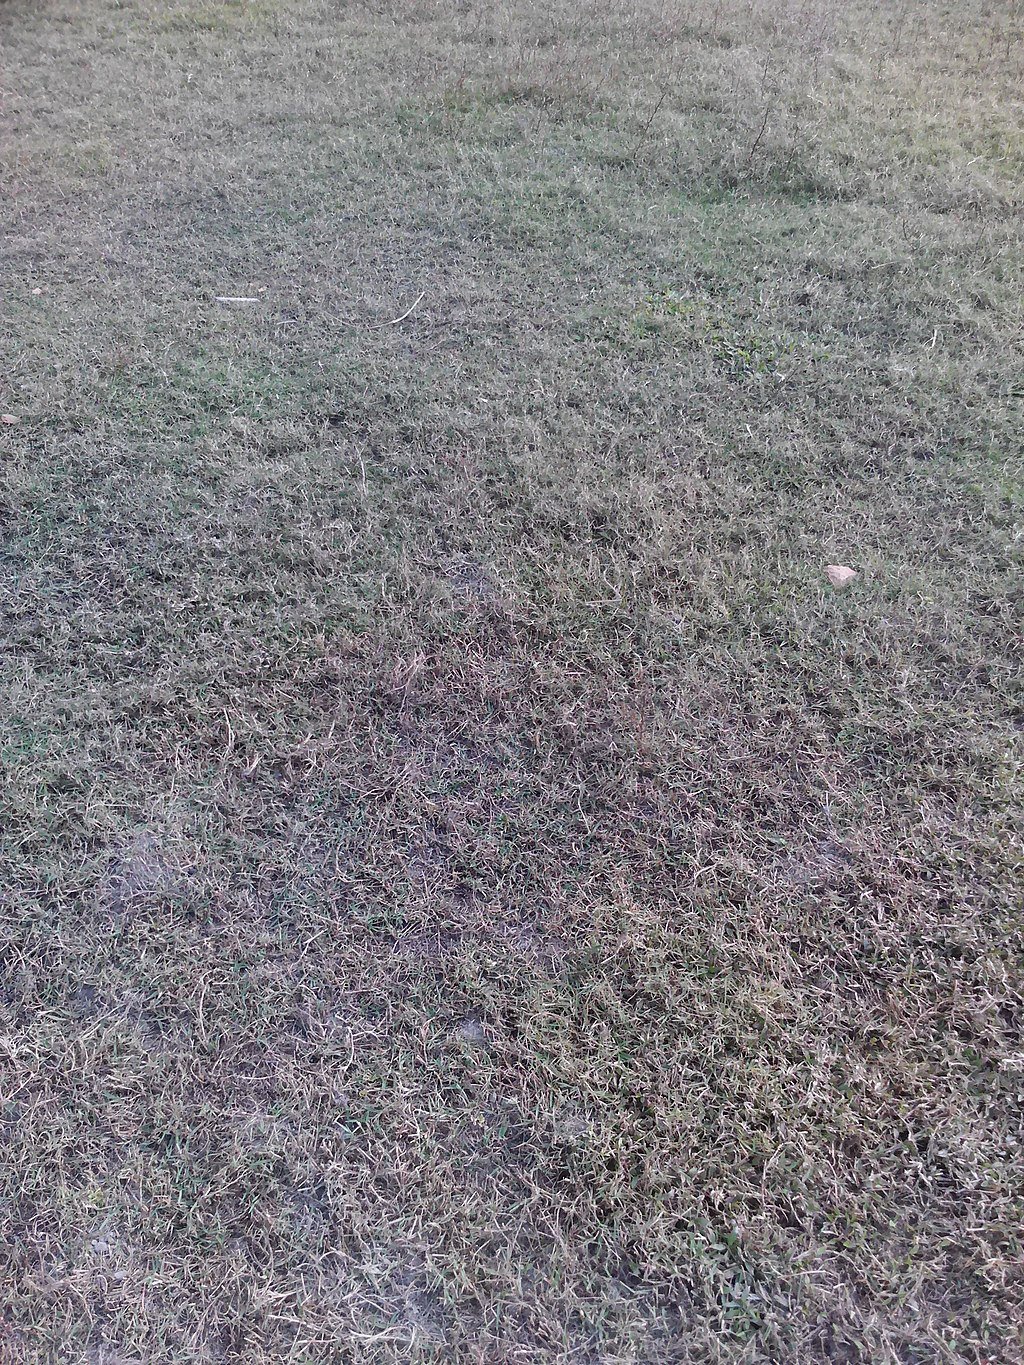 CC-grass in winter